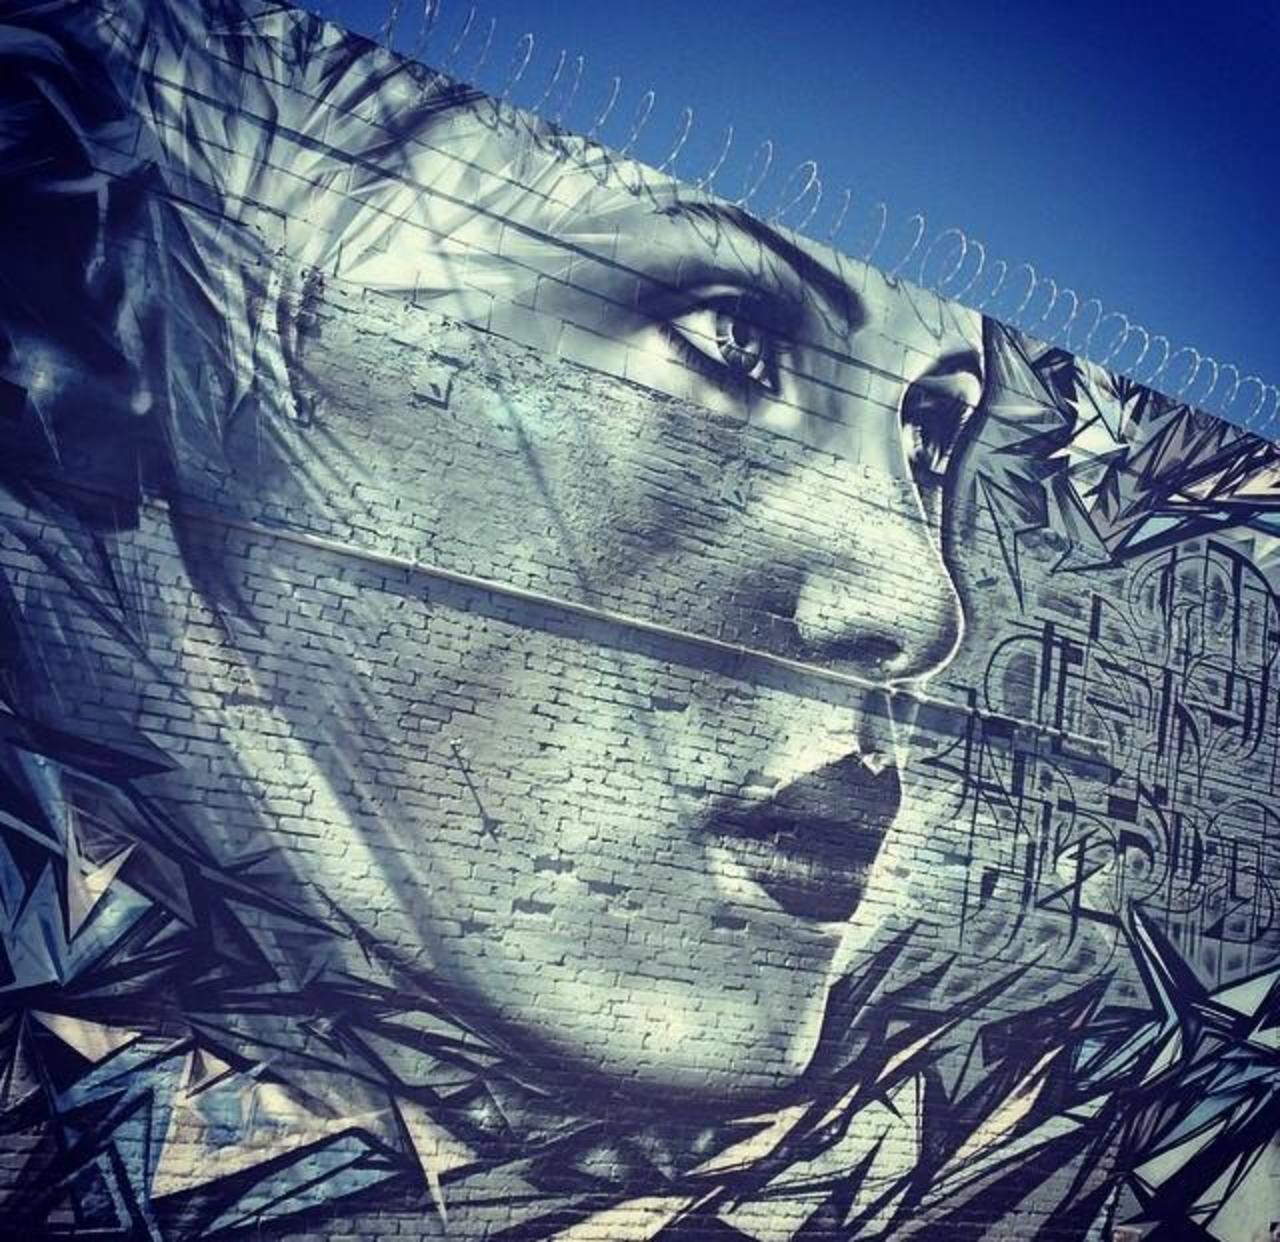 RT @designopinion: Artist @StarFighterA fab new Street Art mural located in #LA  #art #mural #graffiti #streetart http://t.co/xa5MNn7SlF